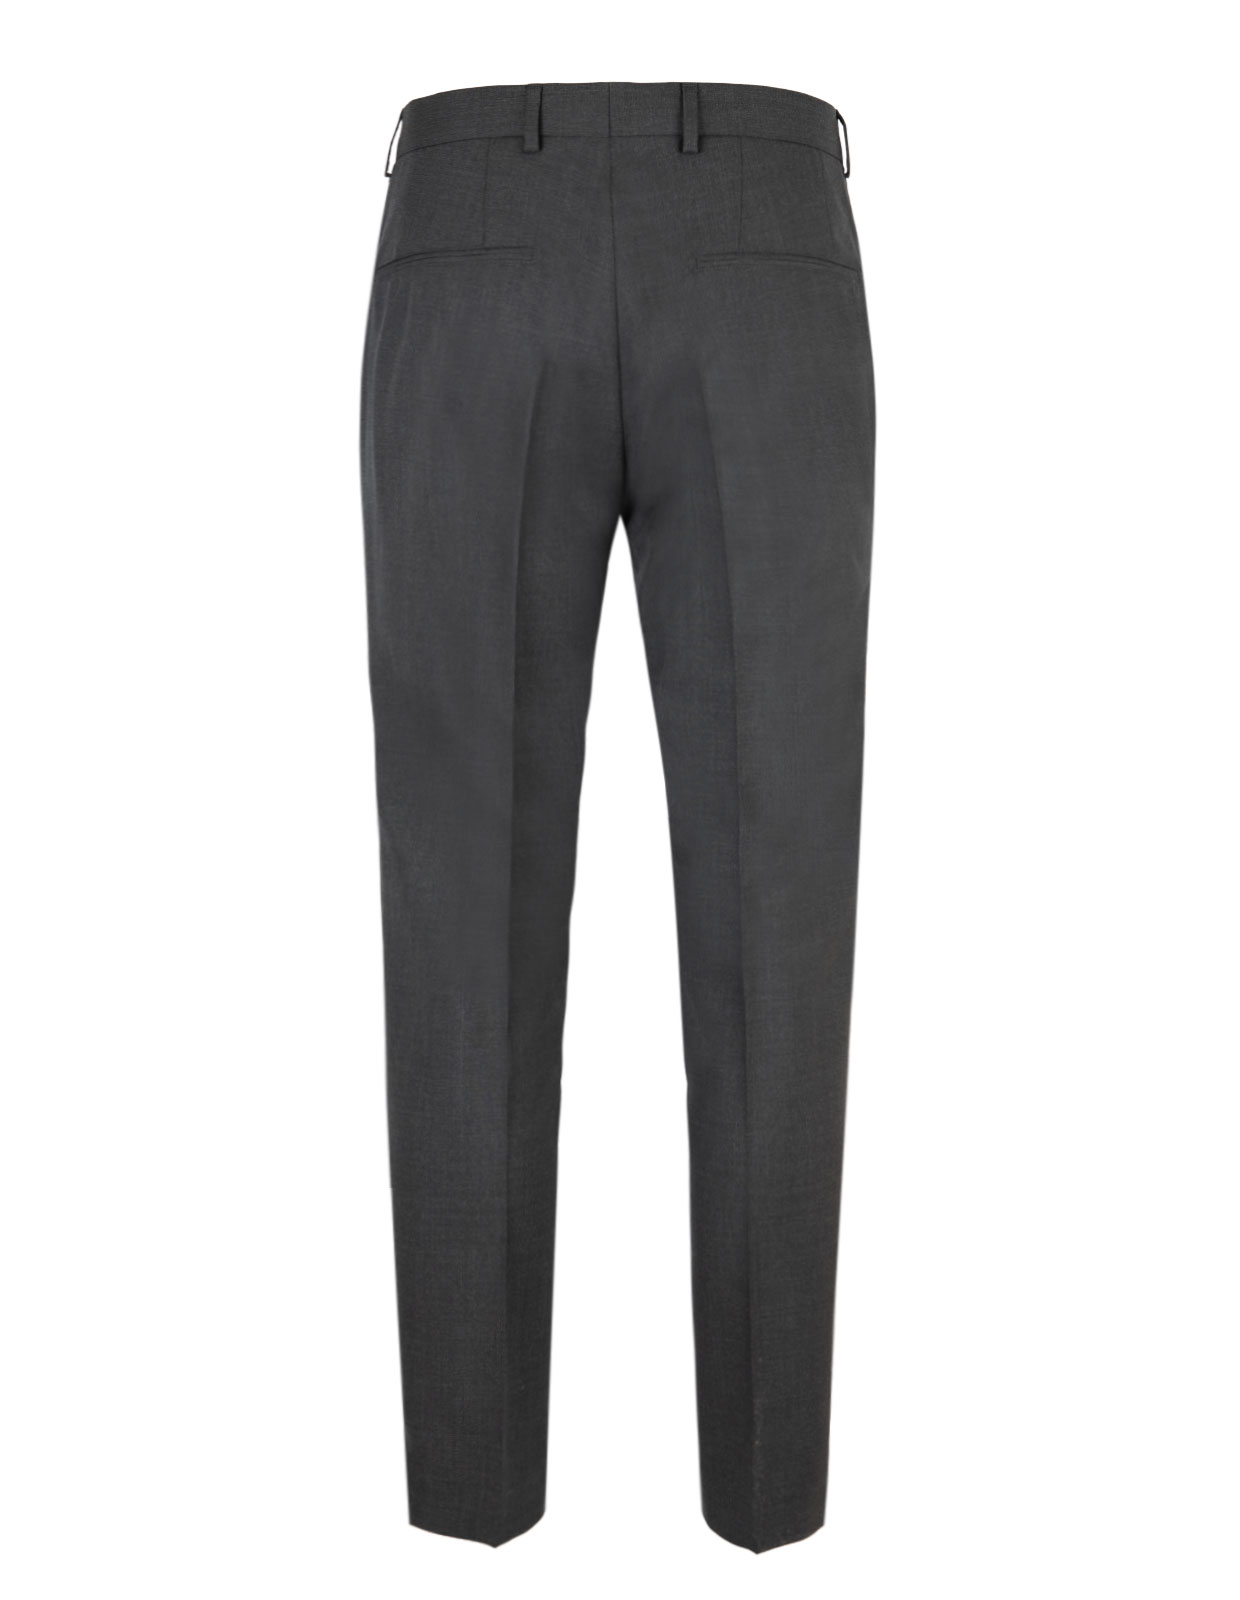 Damien Suit Trousers Slim Fit Mix & Match Wool Grey